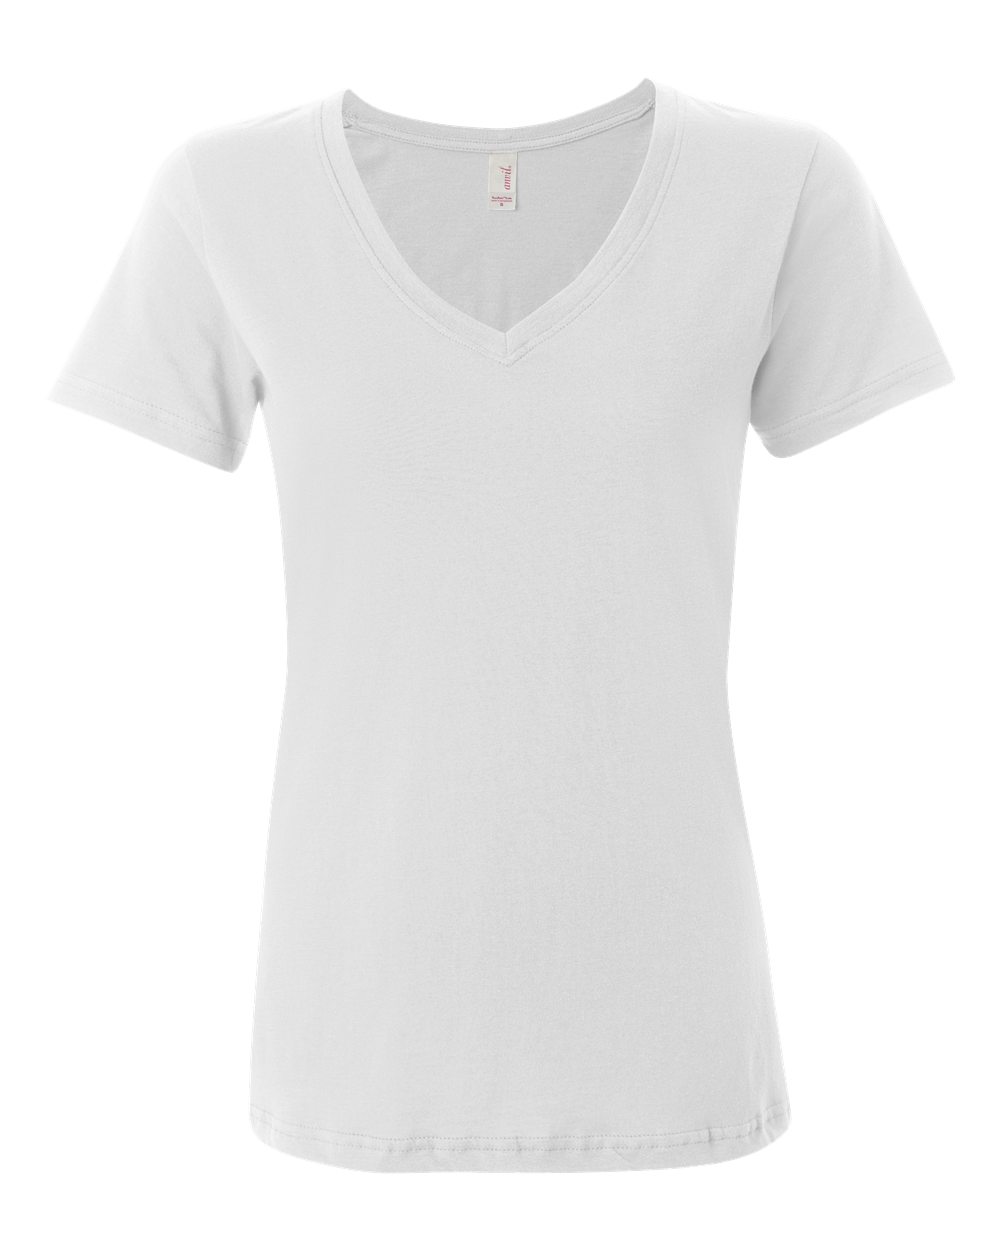 Anvil 392 Ladies' Sheer V-Neck T-Shirt